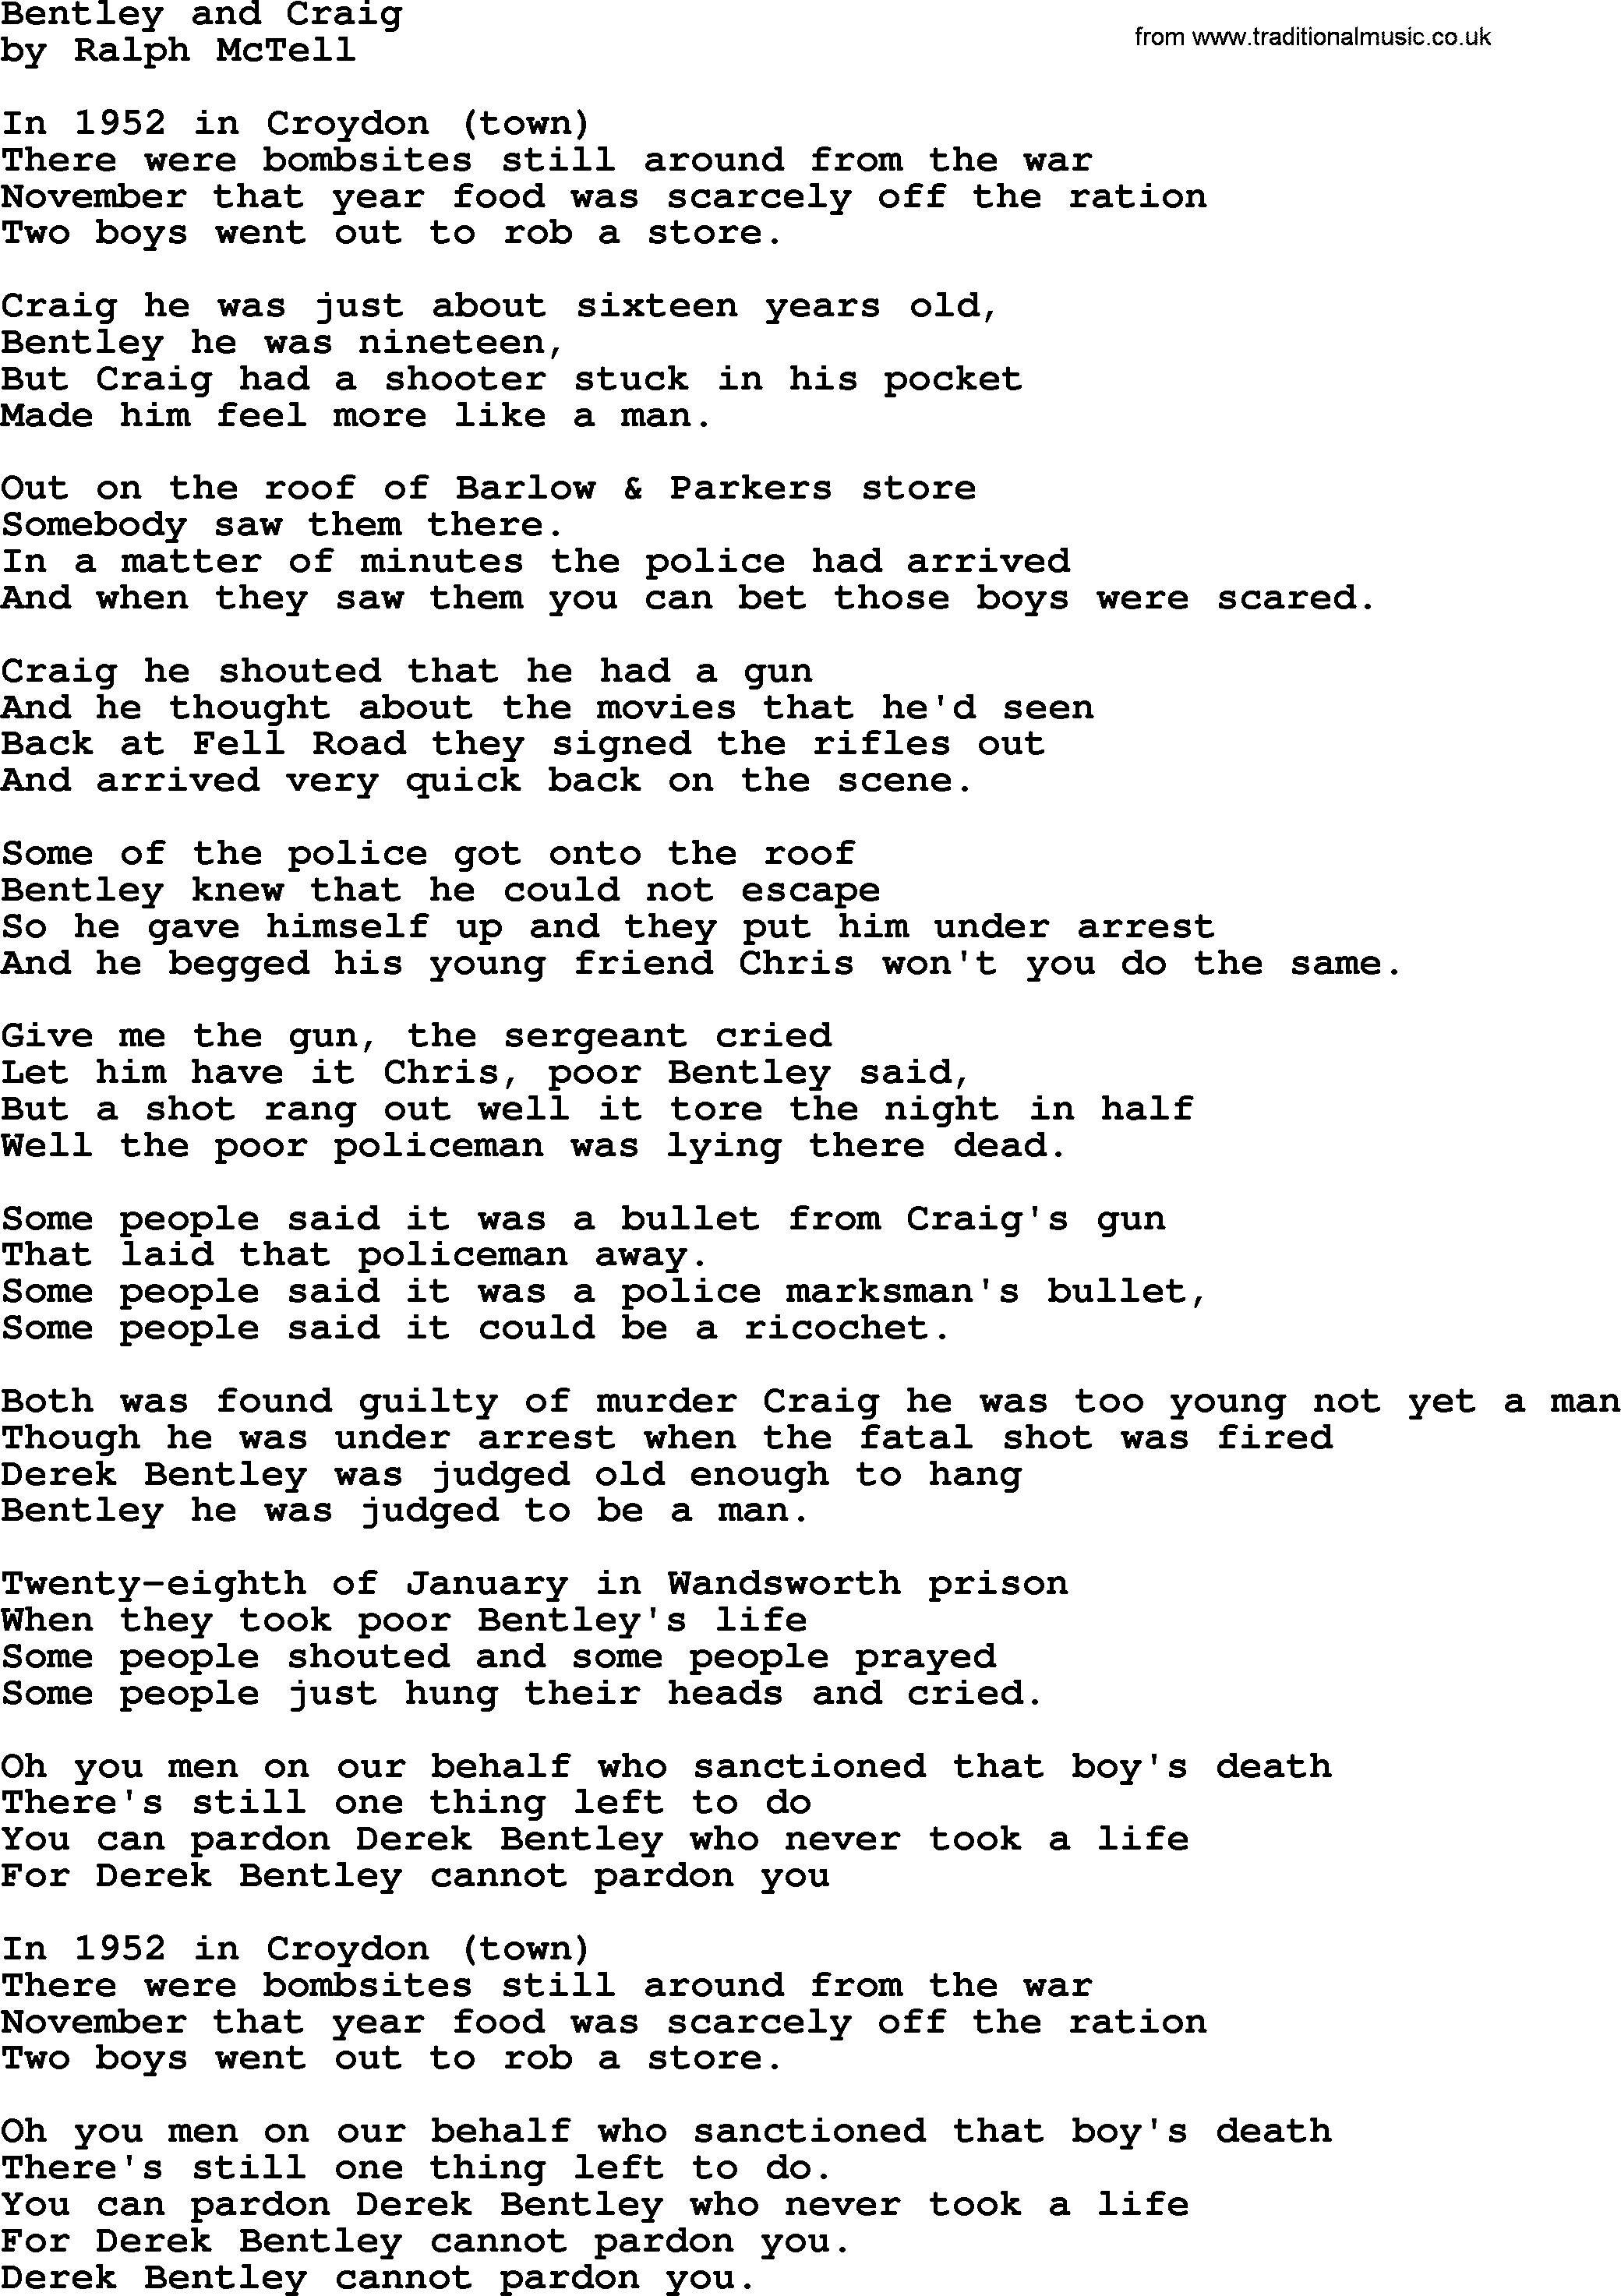 Ralph McTell Song: Bentley And Craig, lyrics